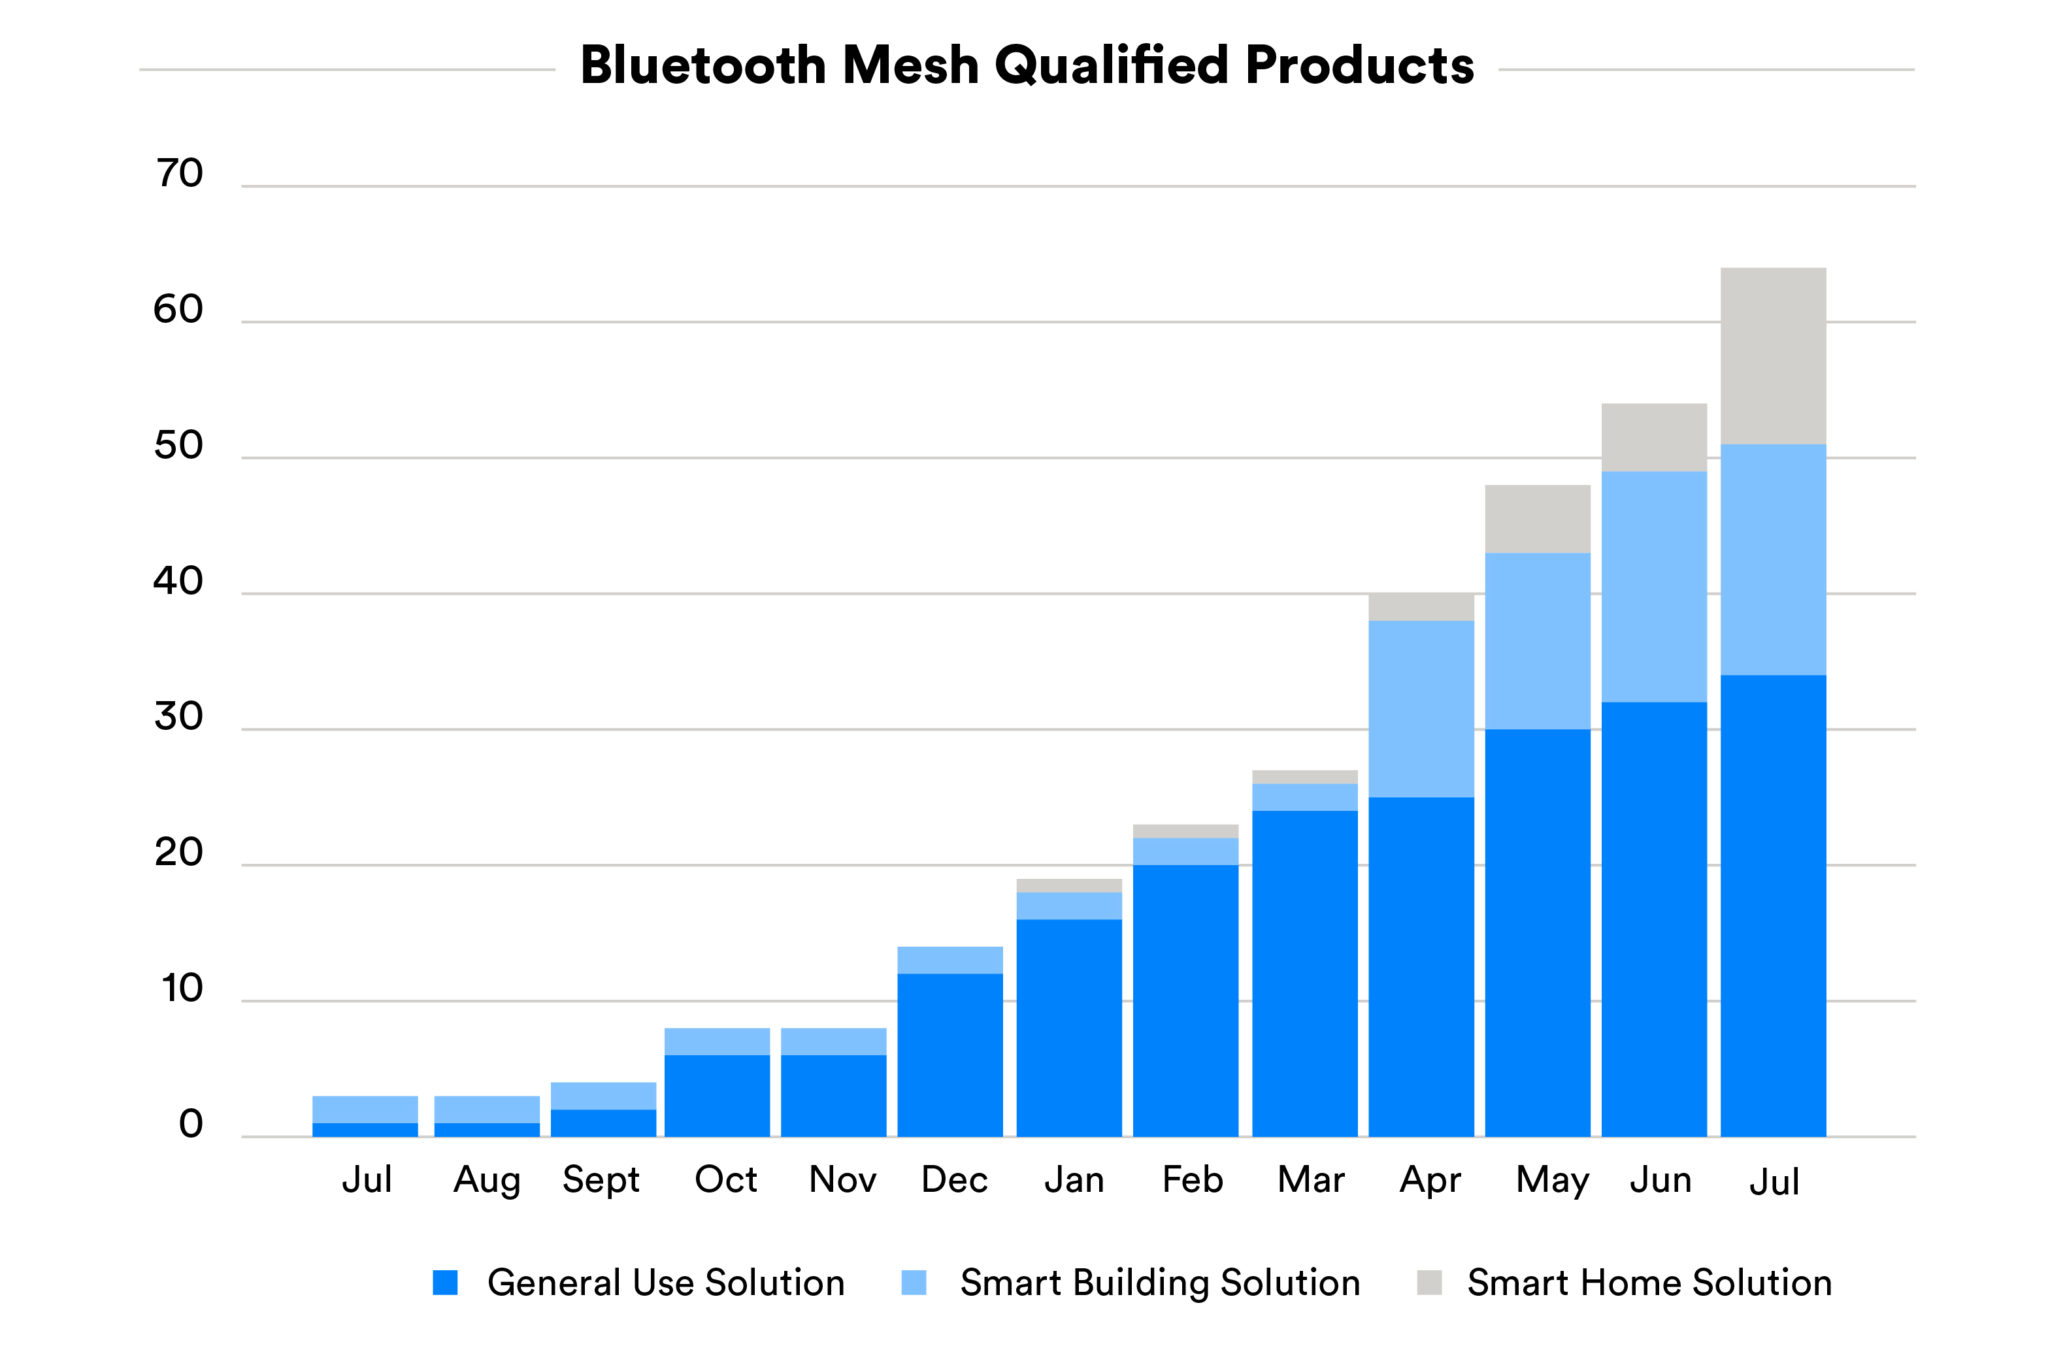 Bluetooth mesh